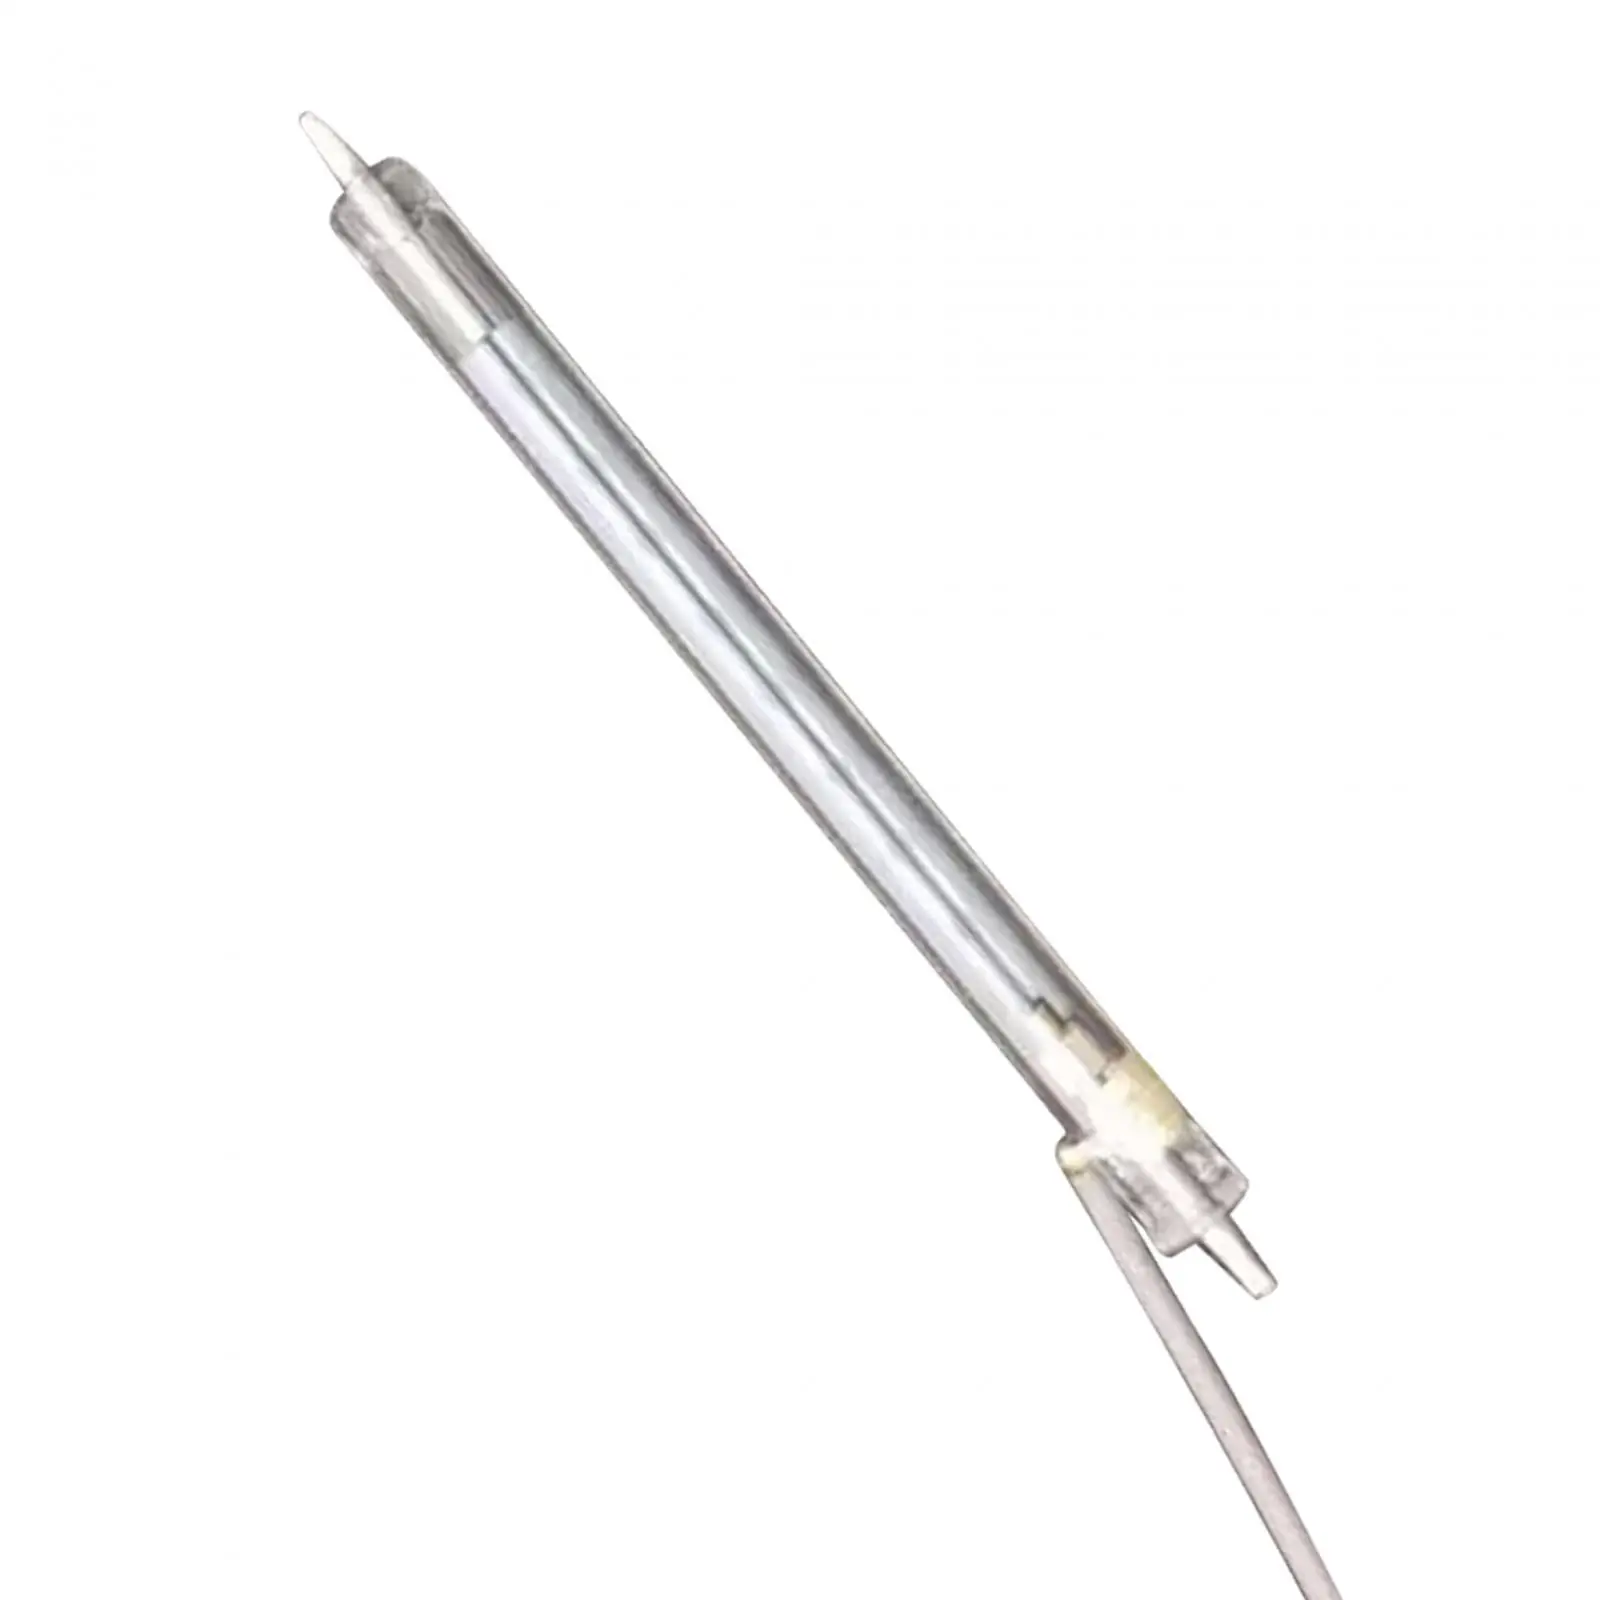 Flash Tube Xenon Lamp Supplies Replacement High Performance Durable Premium Flashtube for 460 460II 560II 560 468 467 565